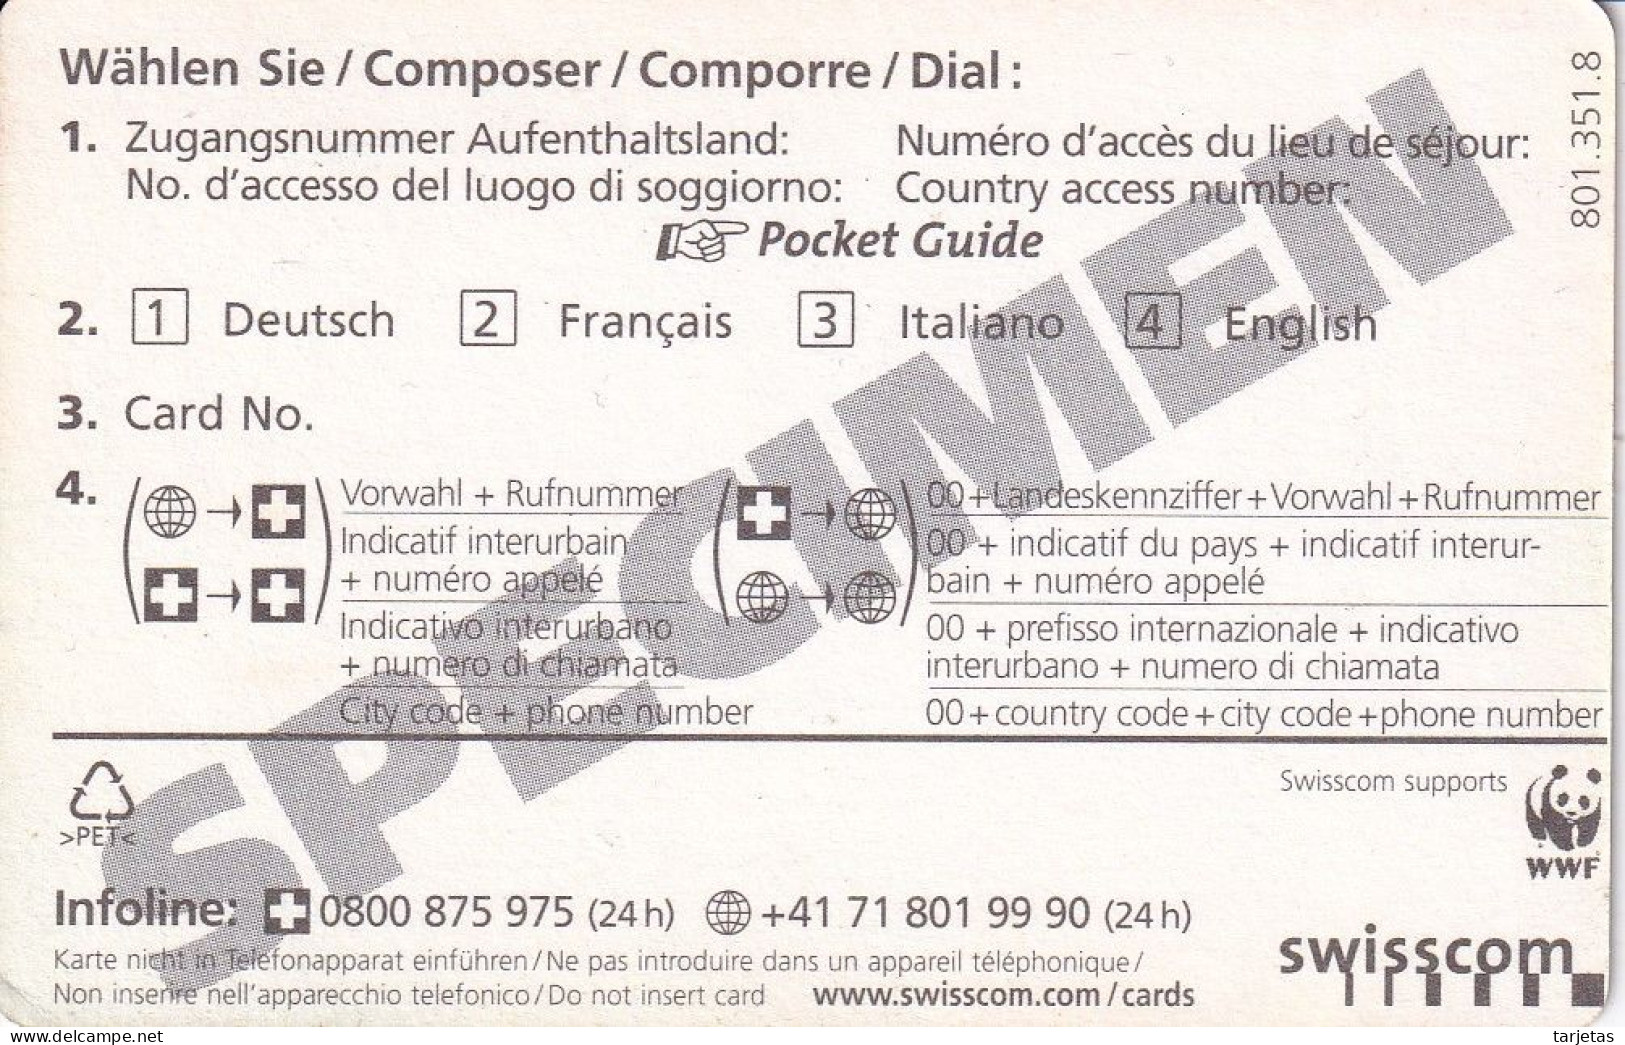 SPECIMEN - TARJETA DE SUIZA DE SWISSCOM DE UN CAMELLO (CAMEL) - Switzerland